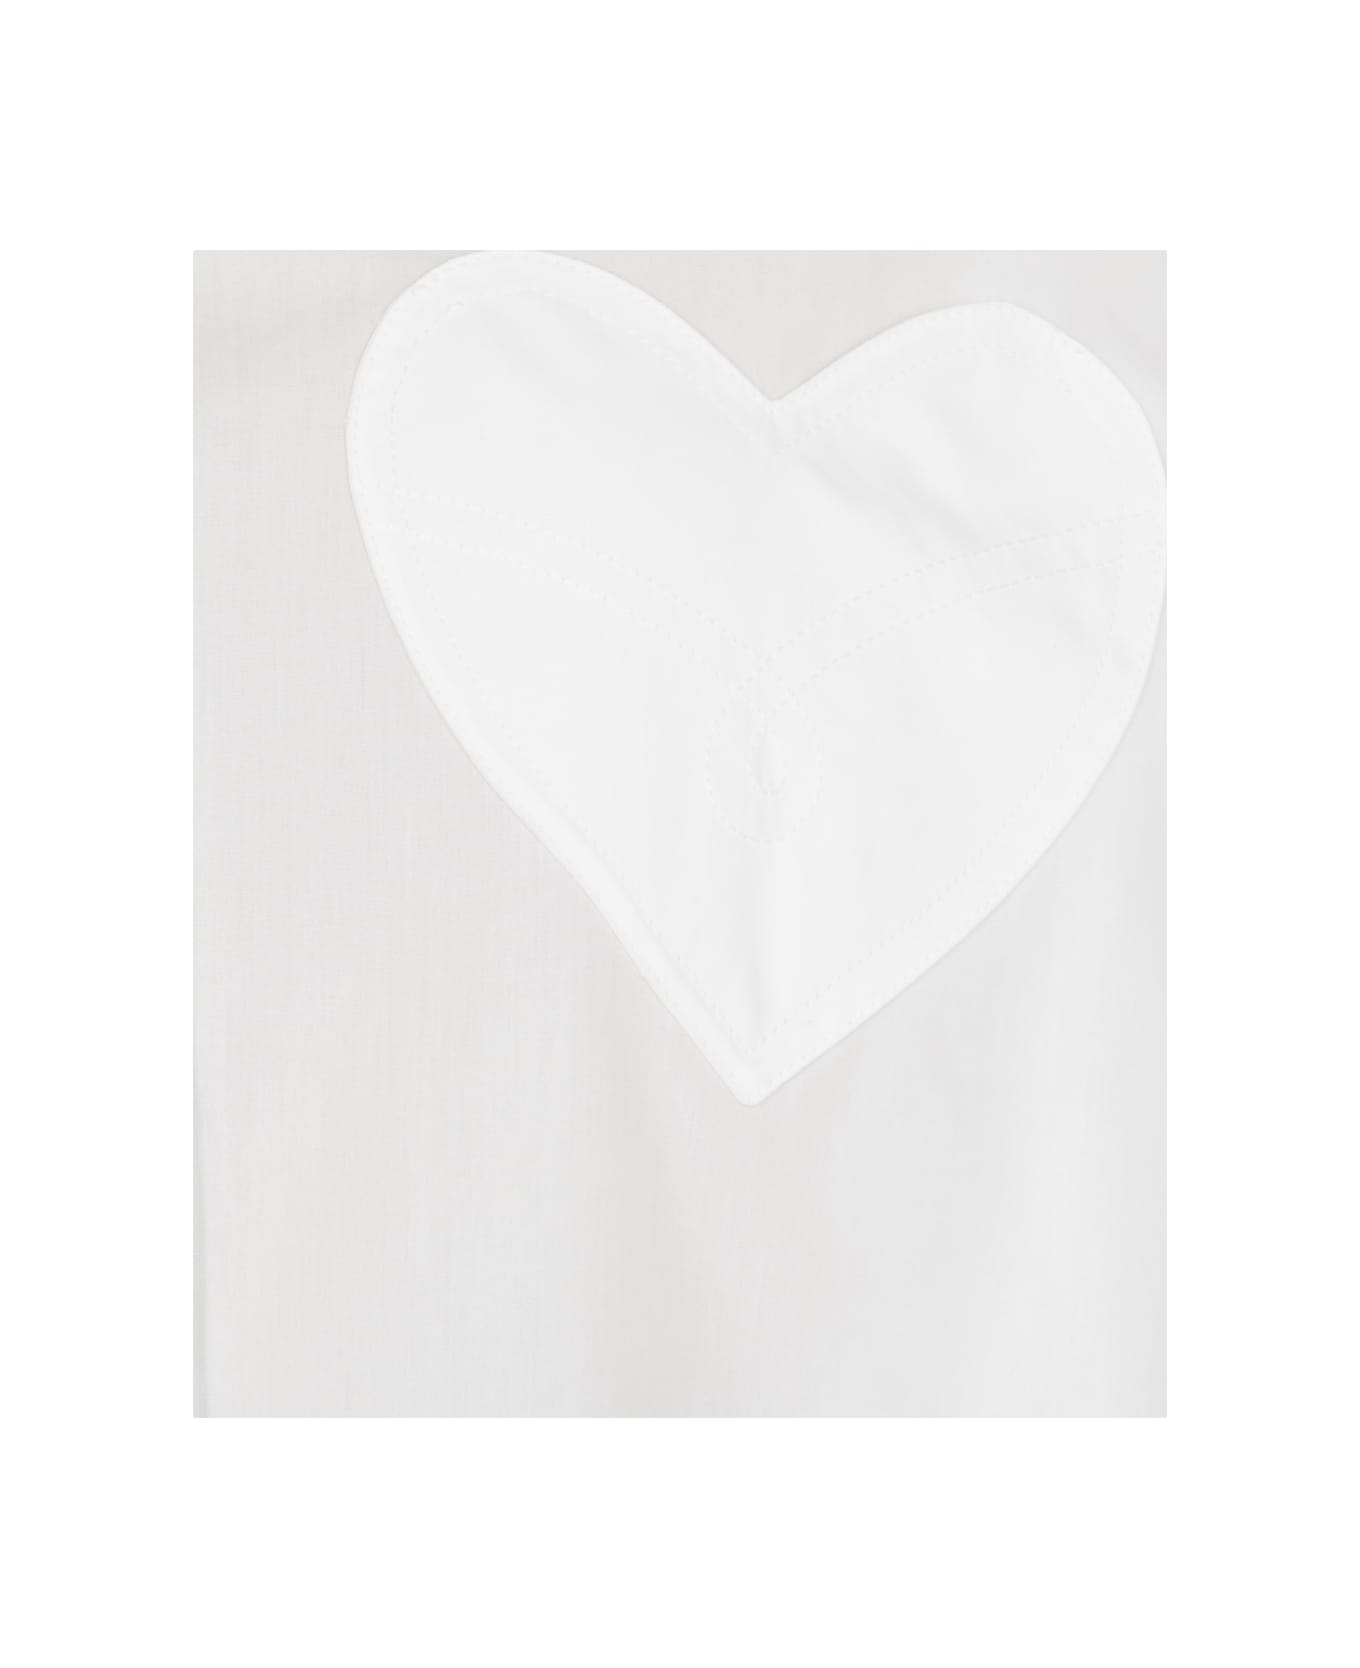 M05CH1N0 Jeans White Poplin Oversize Shirt - White